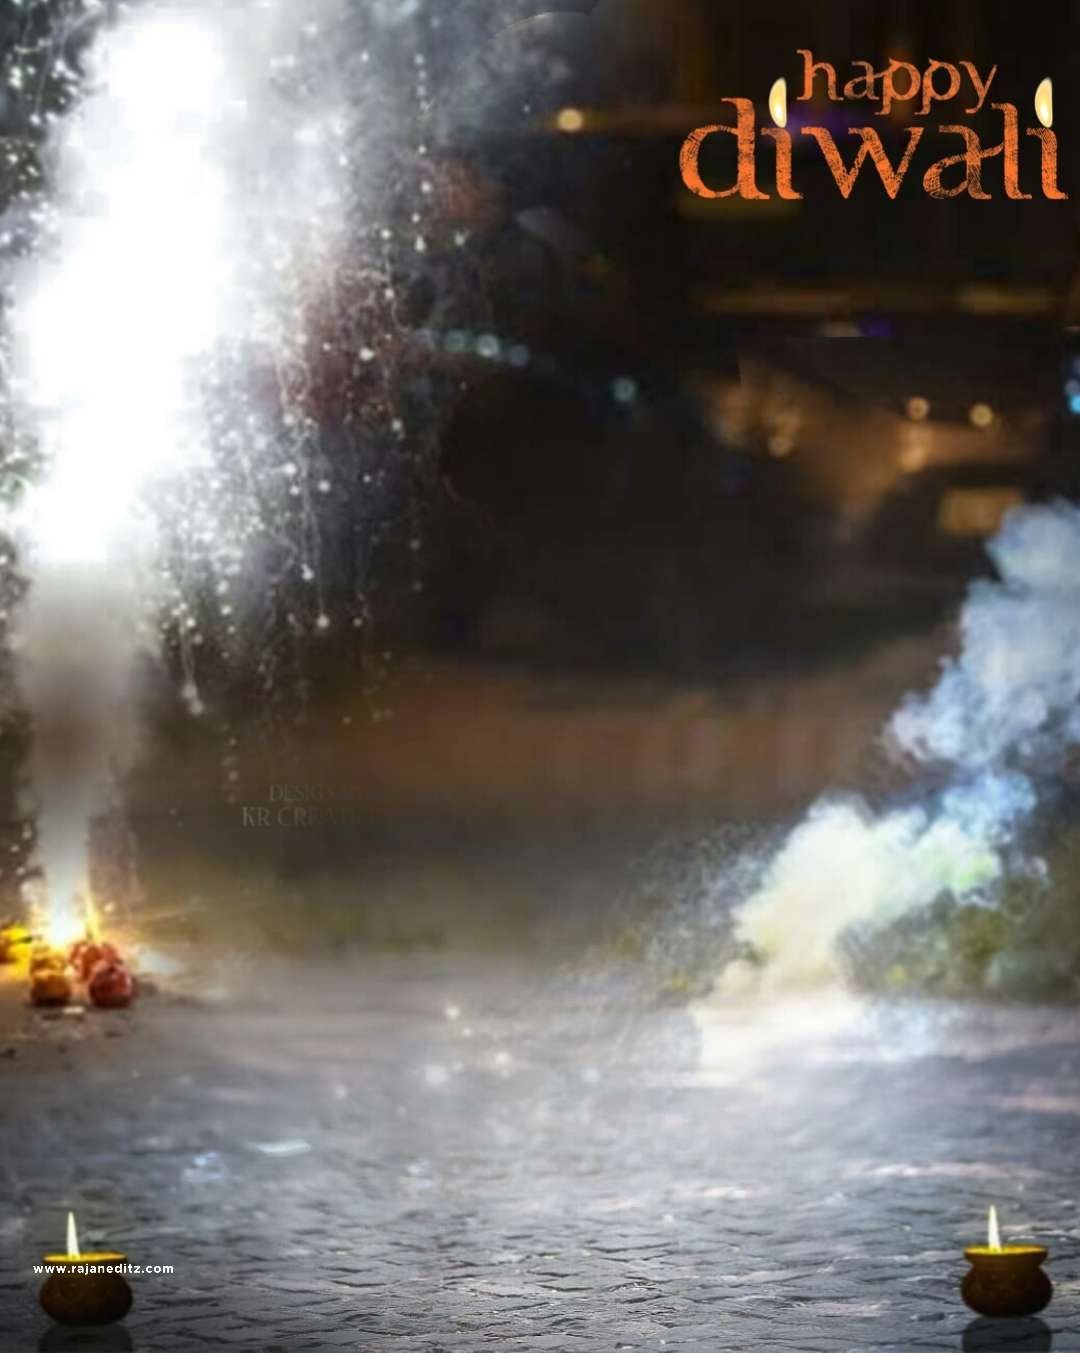 diwali fuljhadi background_Diwali editing background_Rajan editz_diwaki fire 